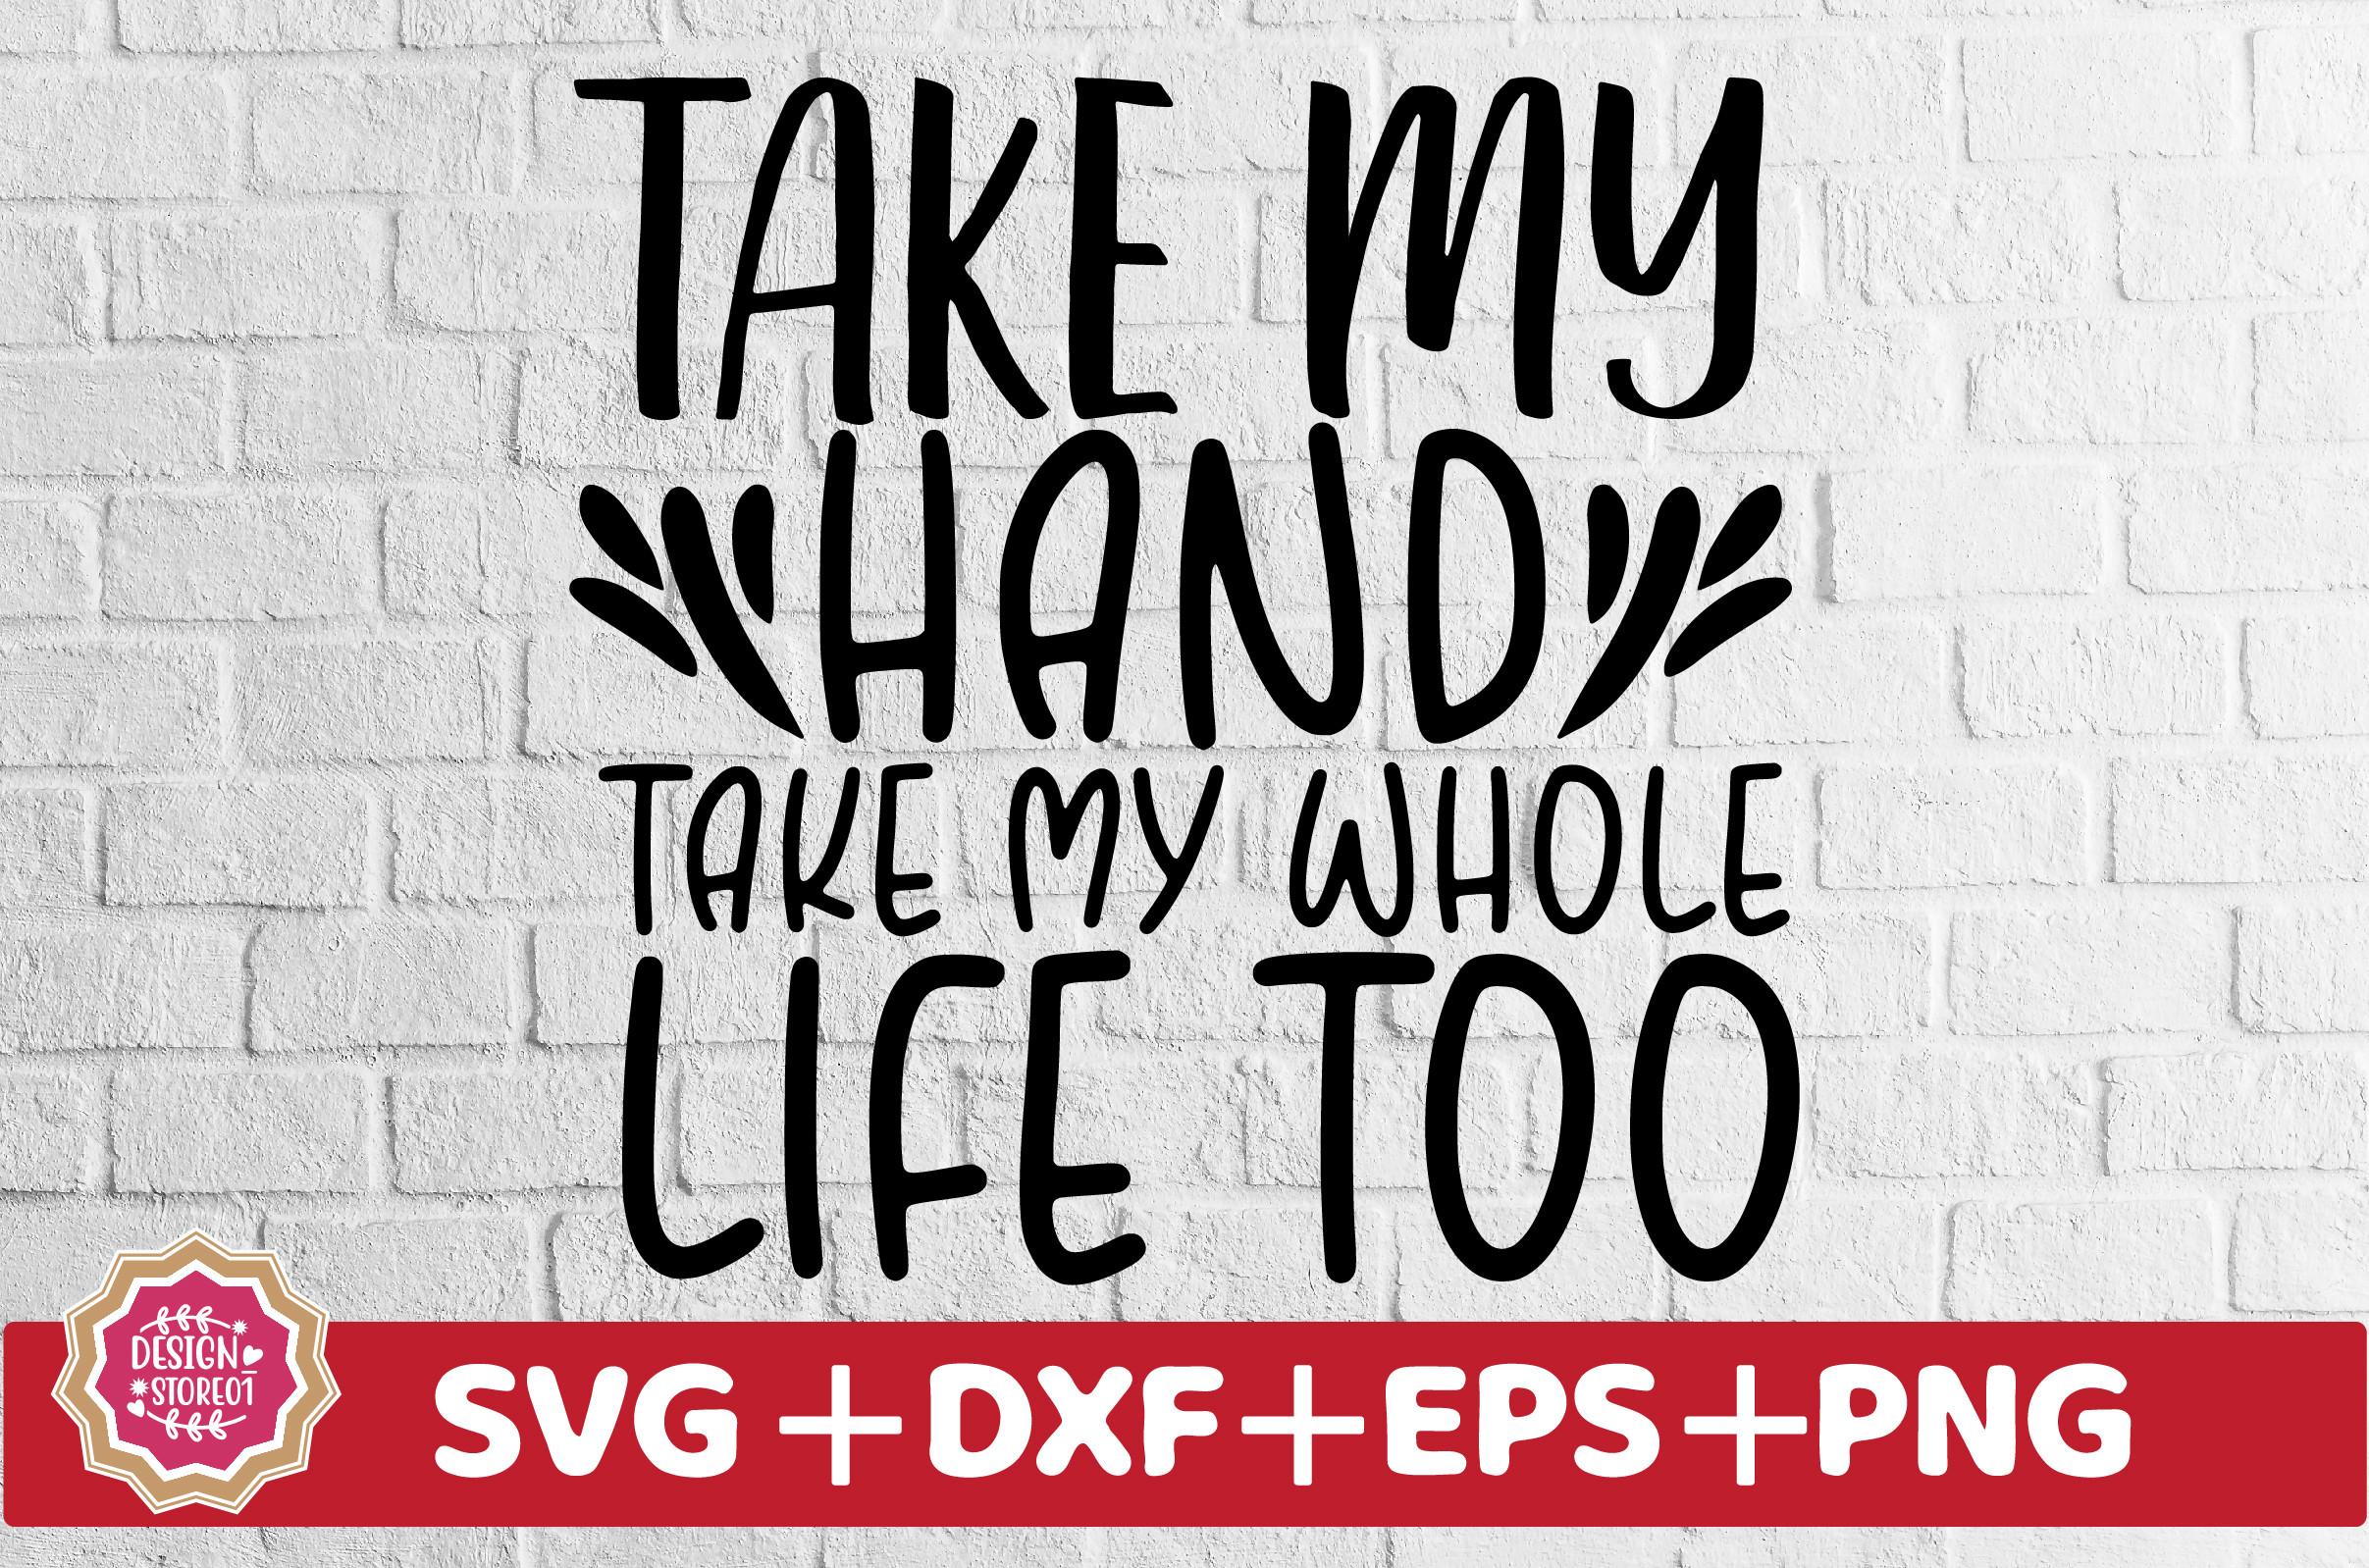 Take My Hand Take My Whole Life Too SVG